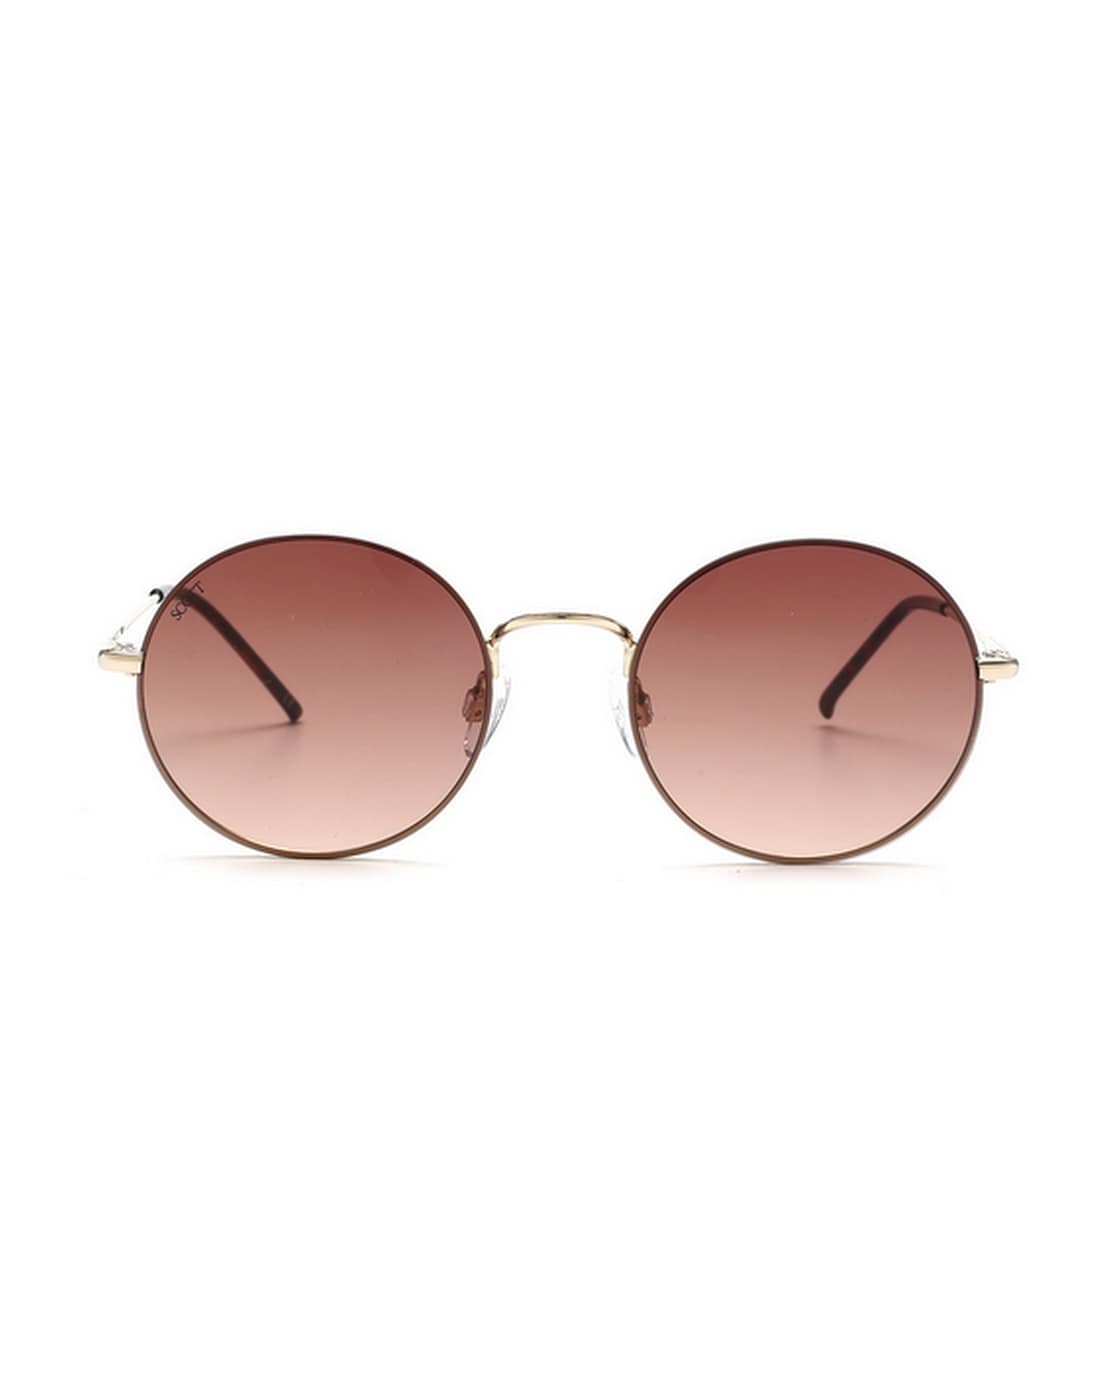 Rue21 Blush Braided Round Sunglasses | Hamilton Place